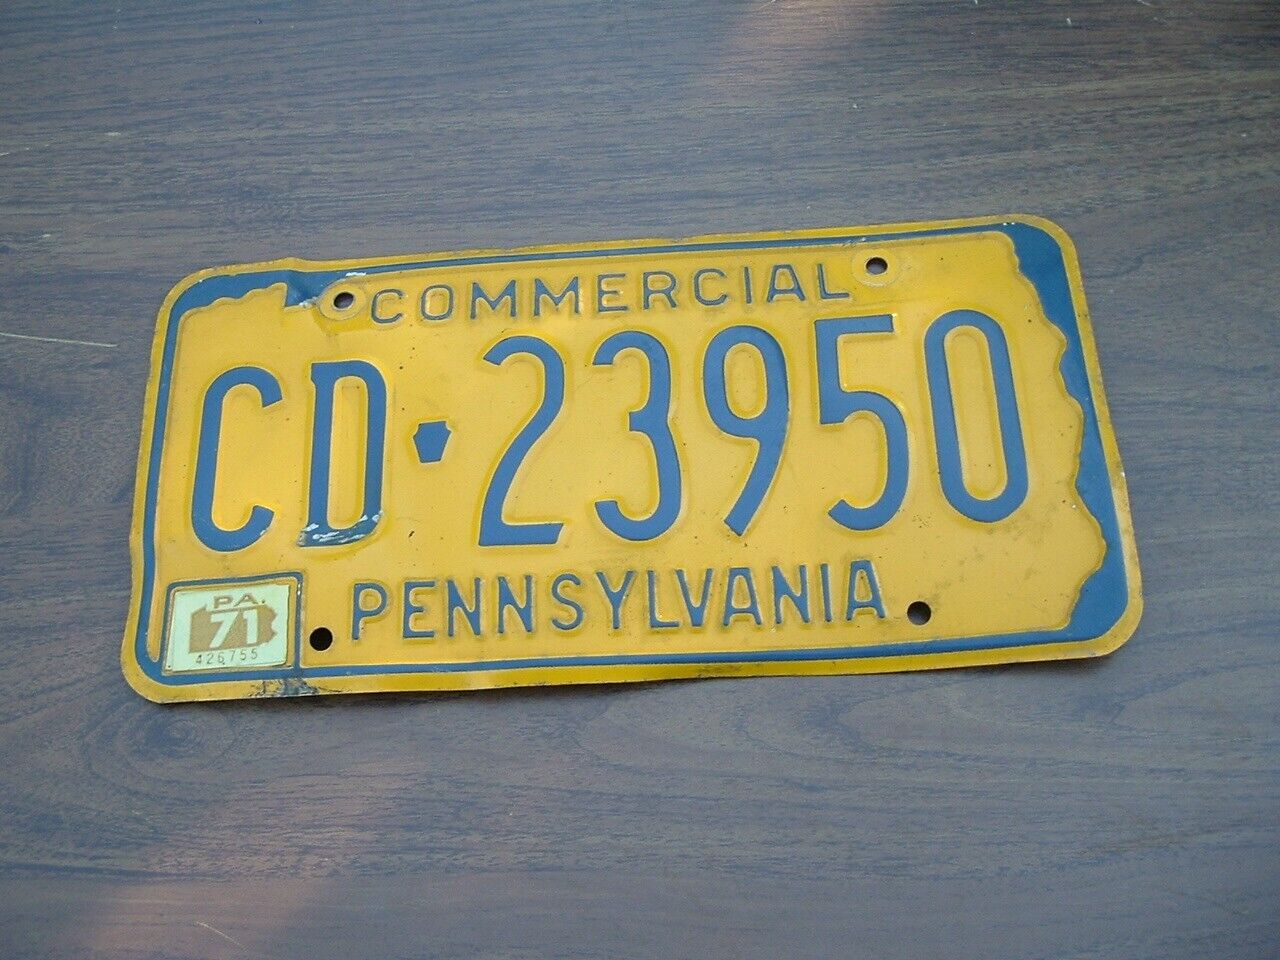 Pennsylvania 1971 Commercial License Plate CD 23950